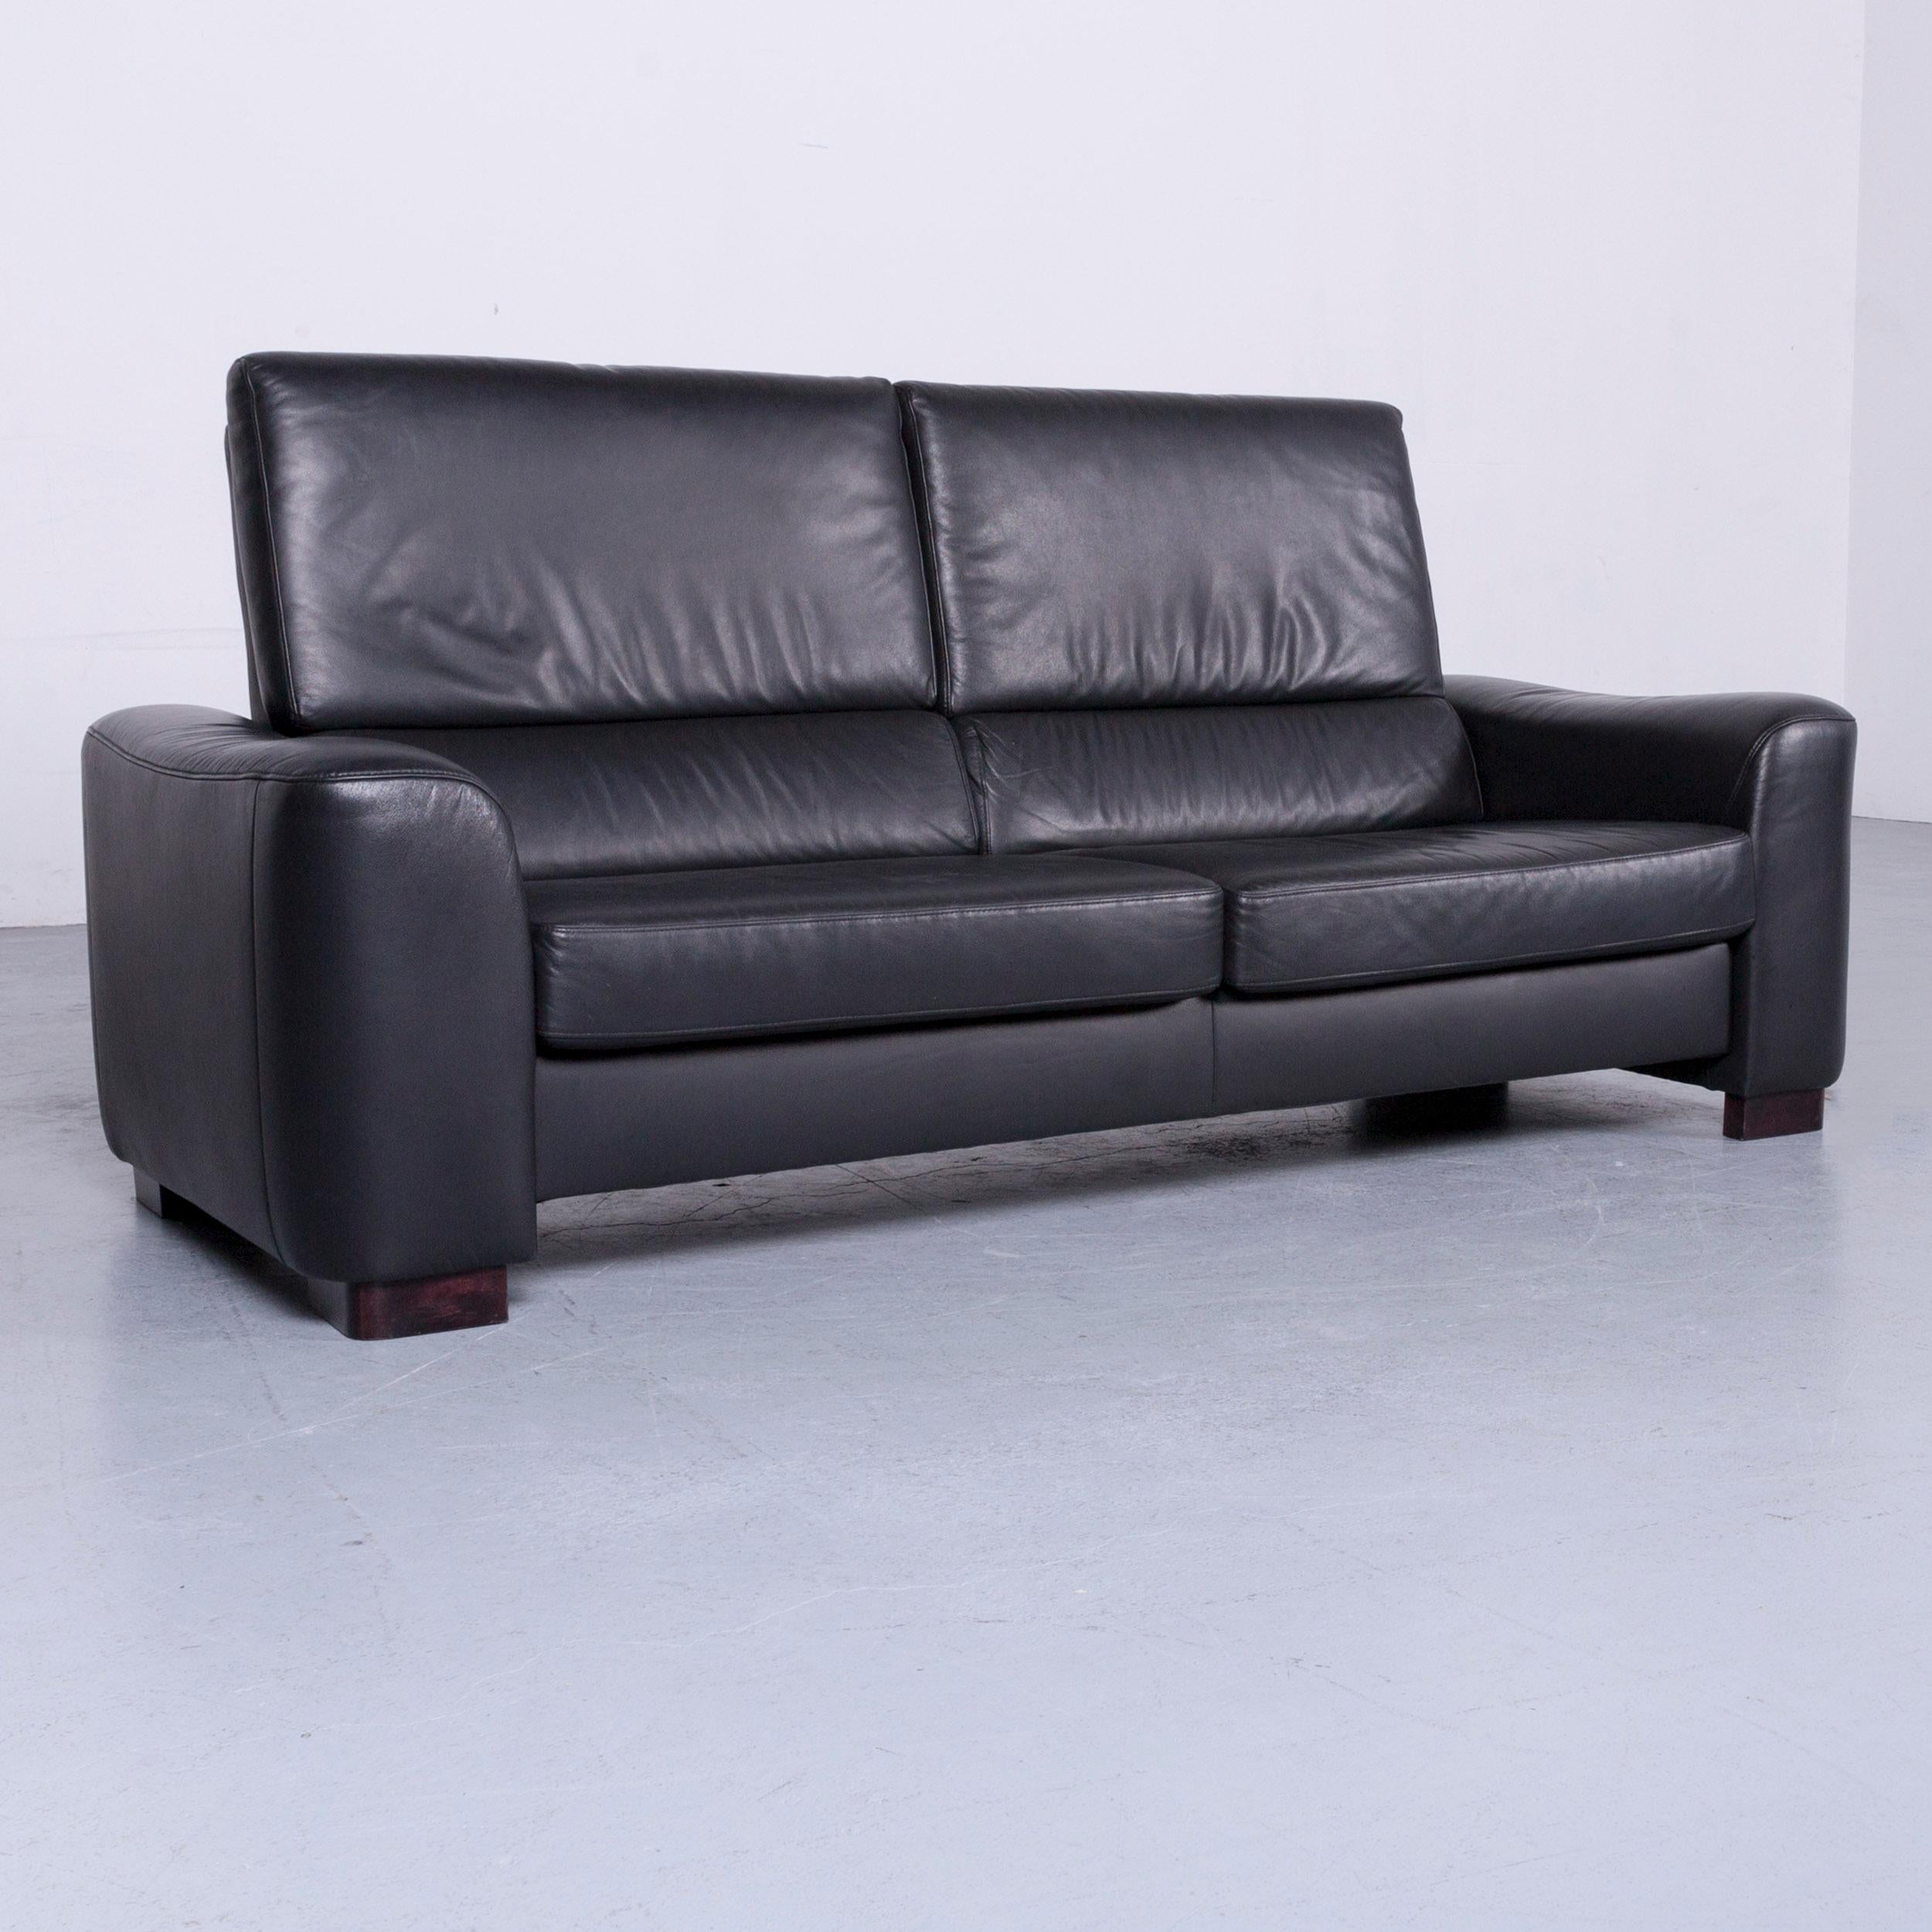 Black colored original Ewald Schillig designer leather sofa in a minimalistic and modern design, made for pure comfort.